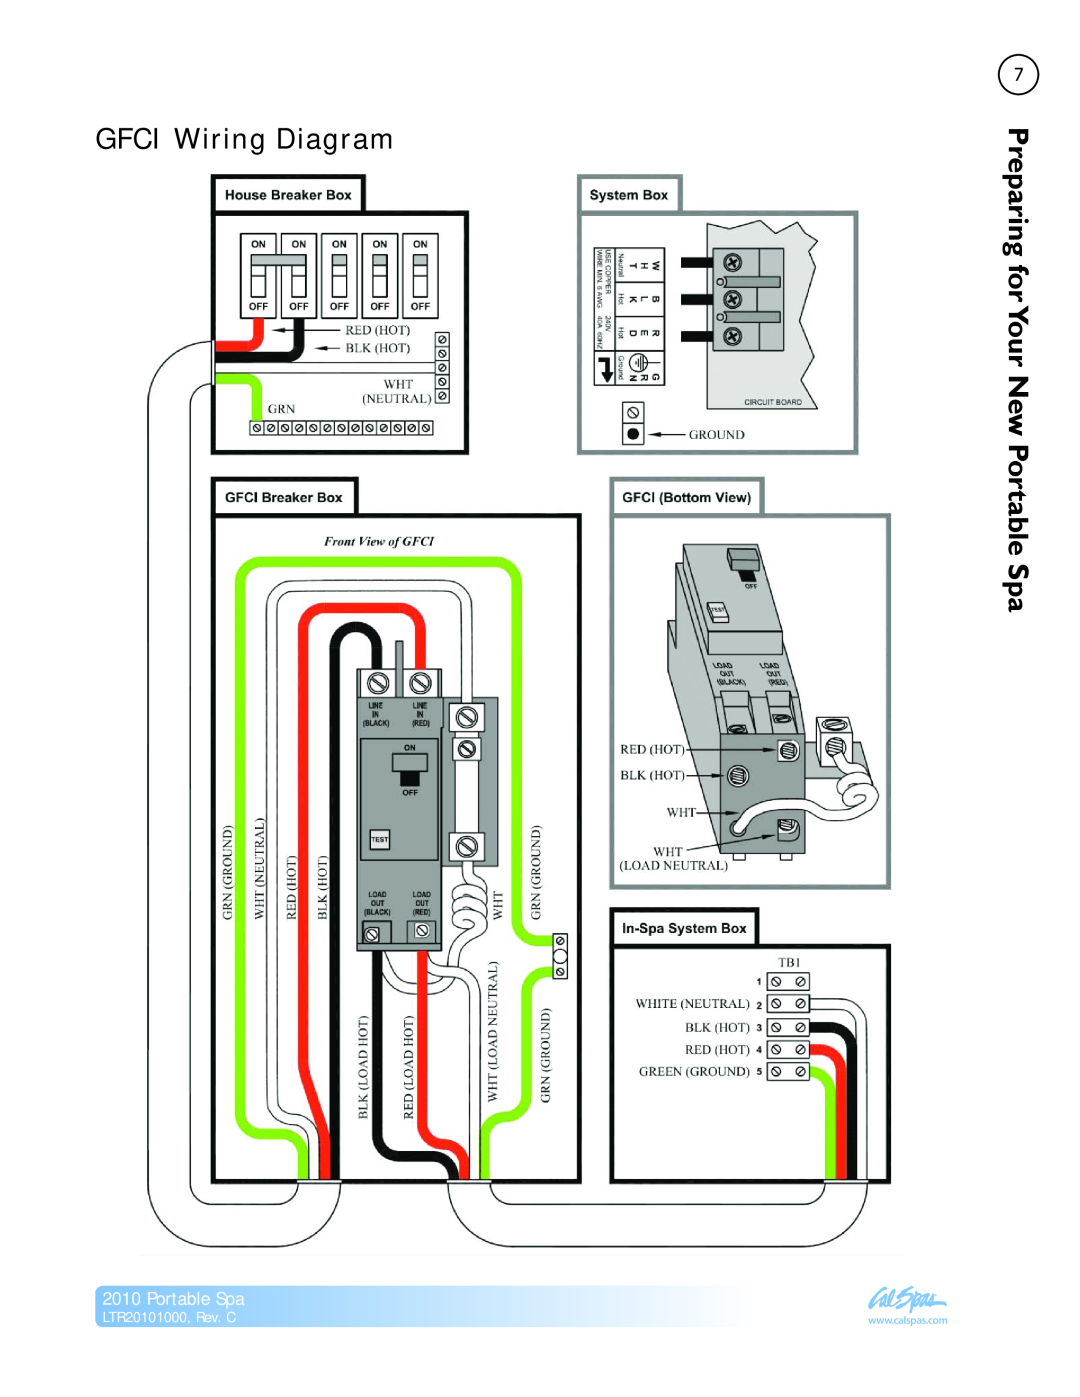 Cal Spas manual GFCI Wiring Diagram, Your New Portable Spa, LTR20101000, Rev. C, Preparingfor 